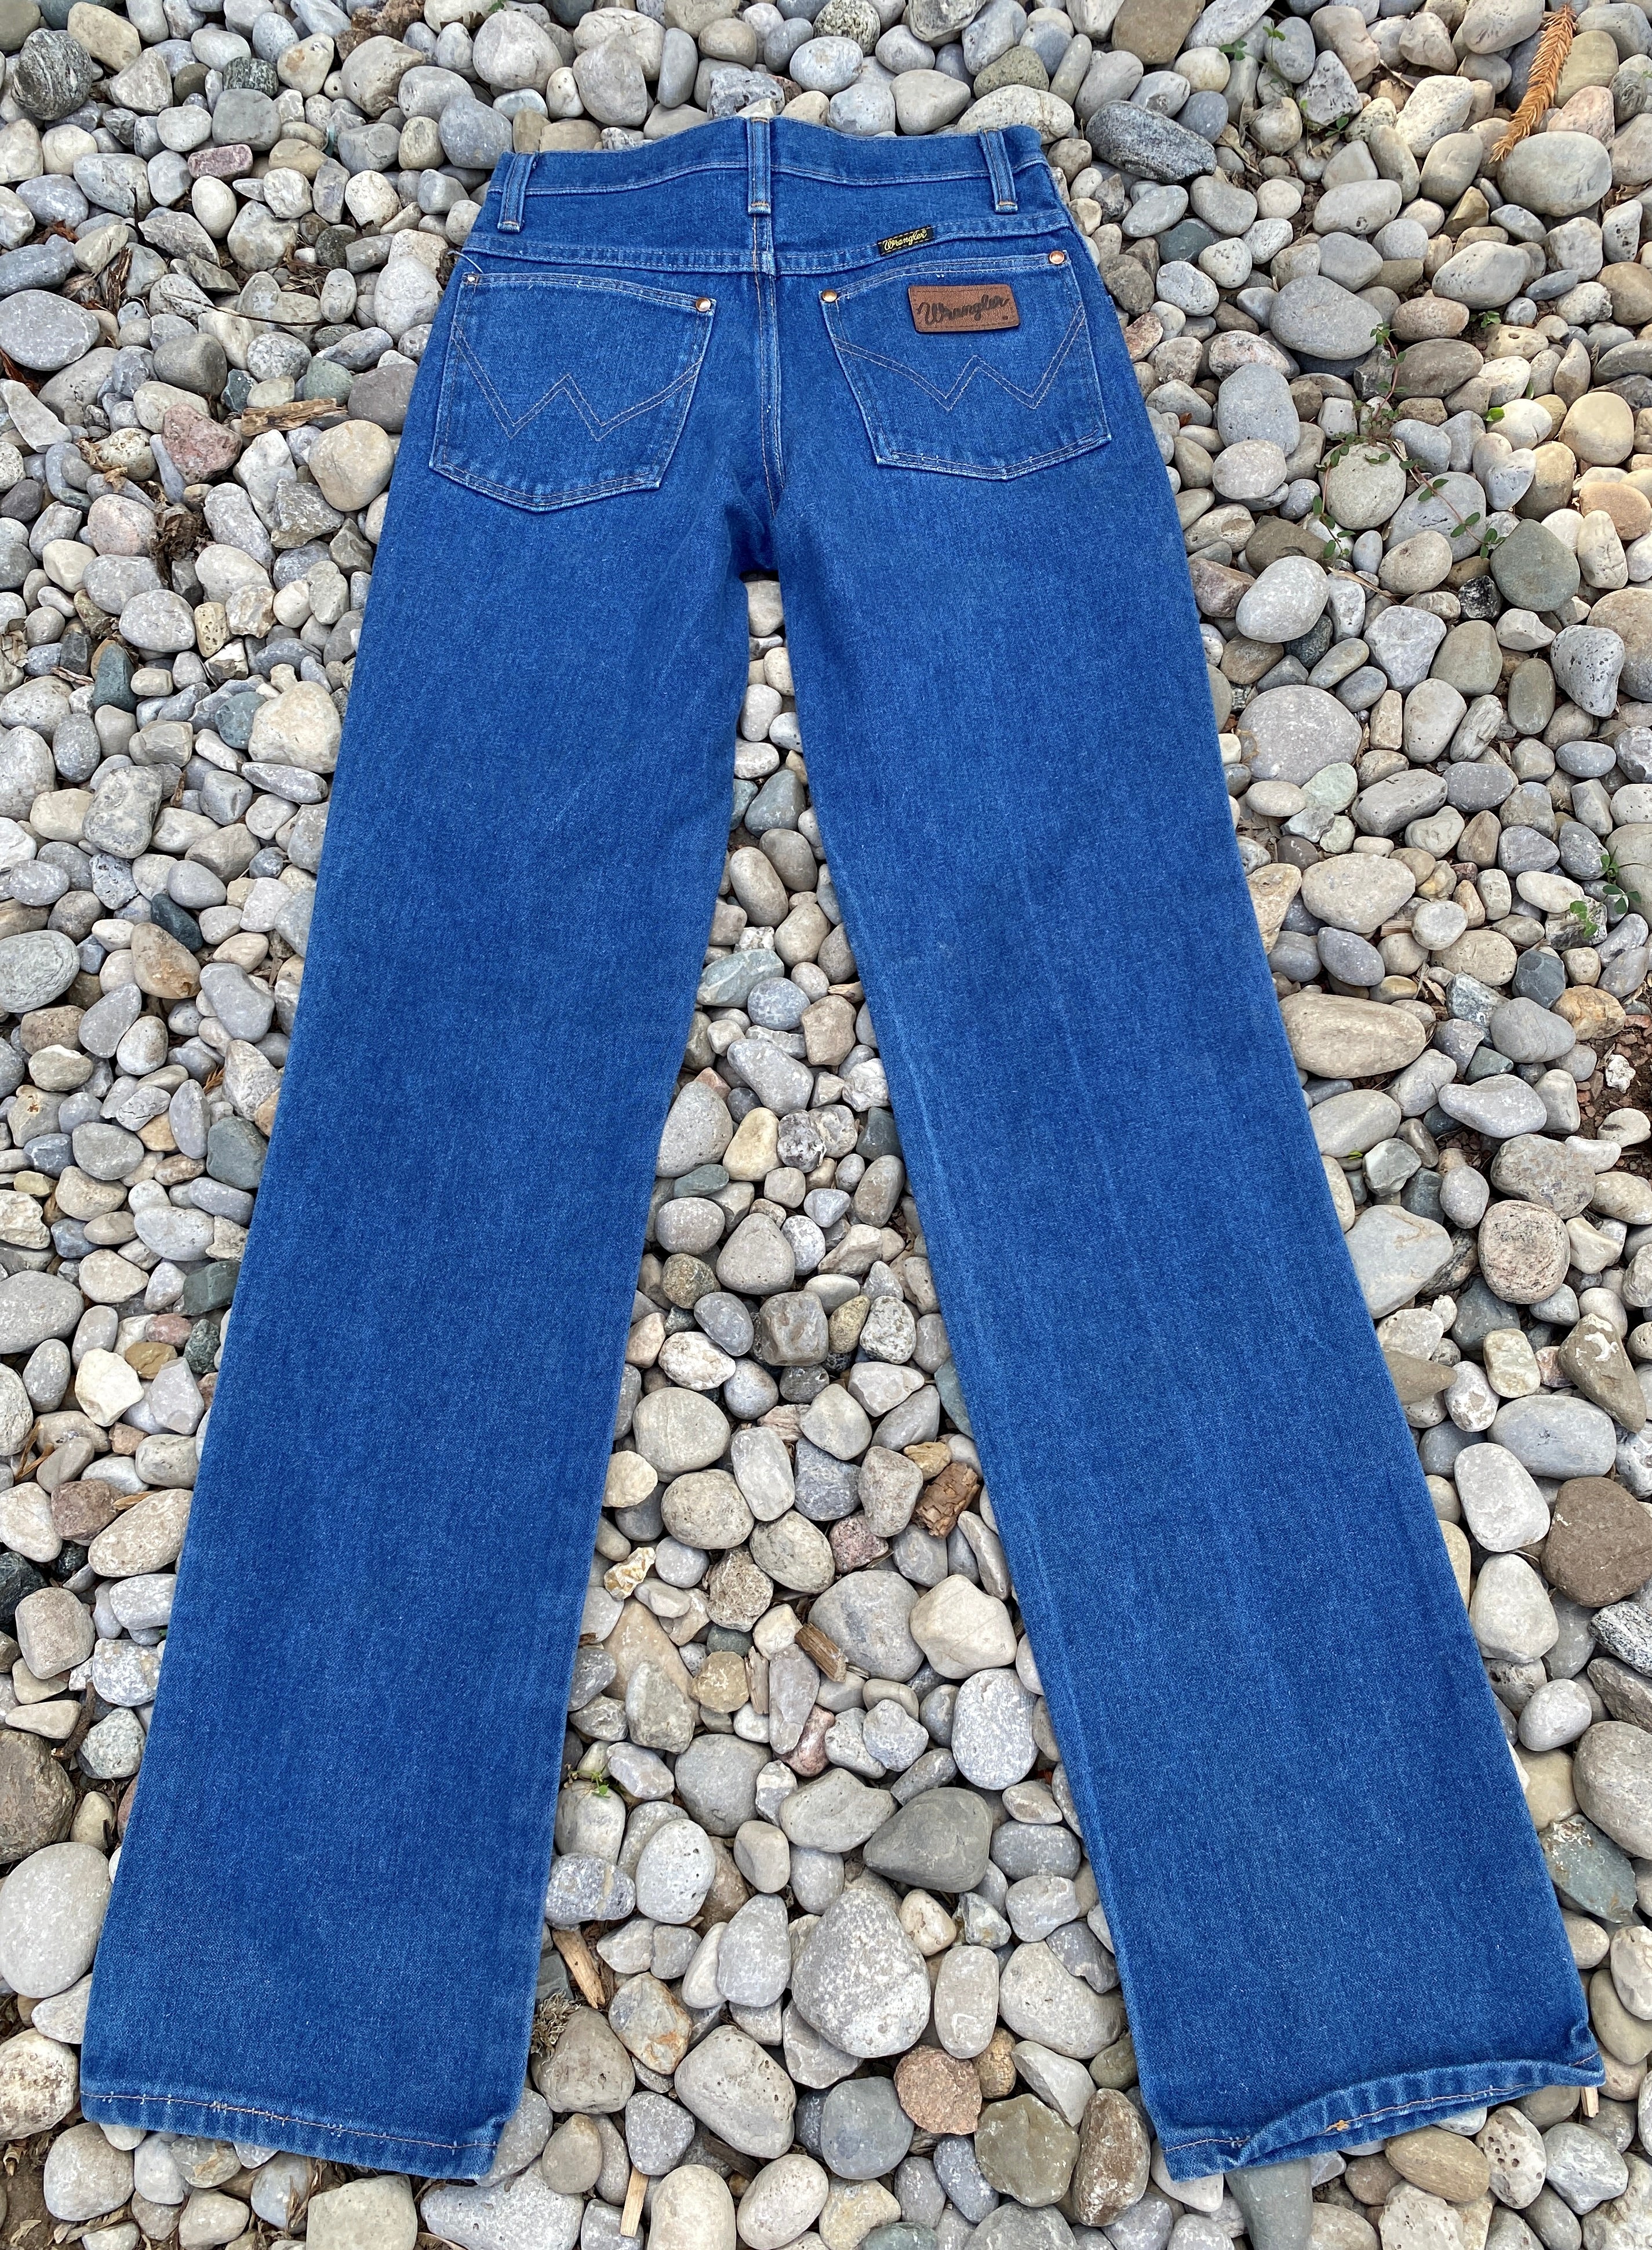 Vintage 1970s Wrangler Medium to Dark Wash Jeans size 26 or 27 USA